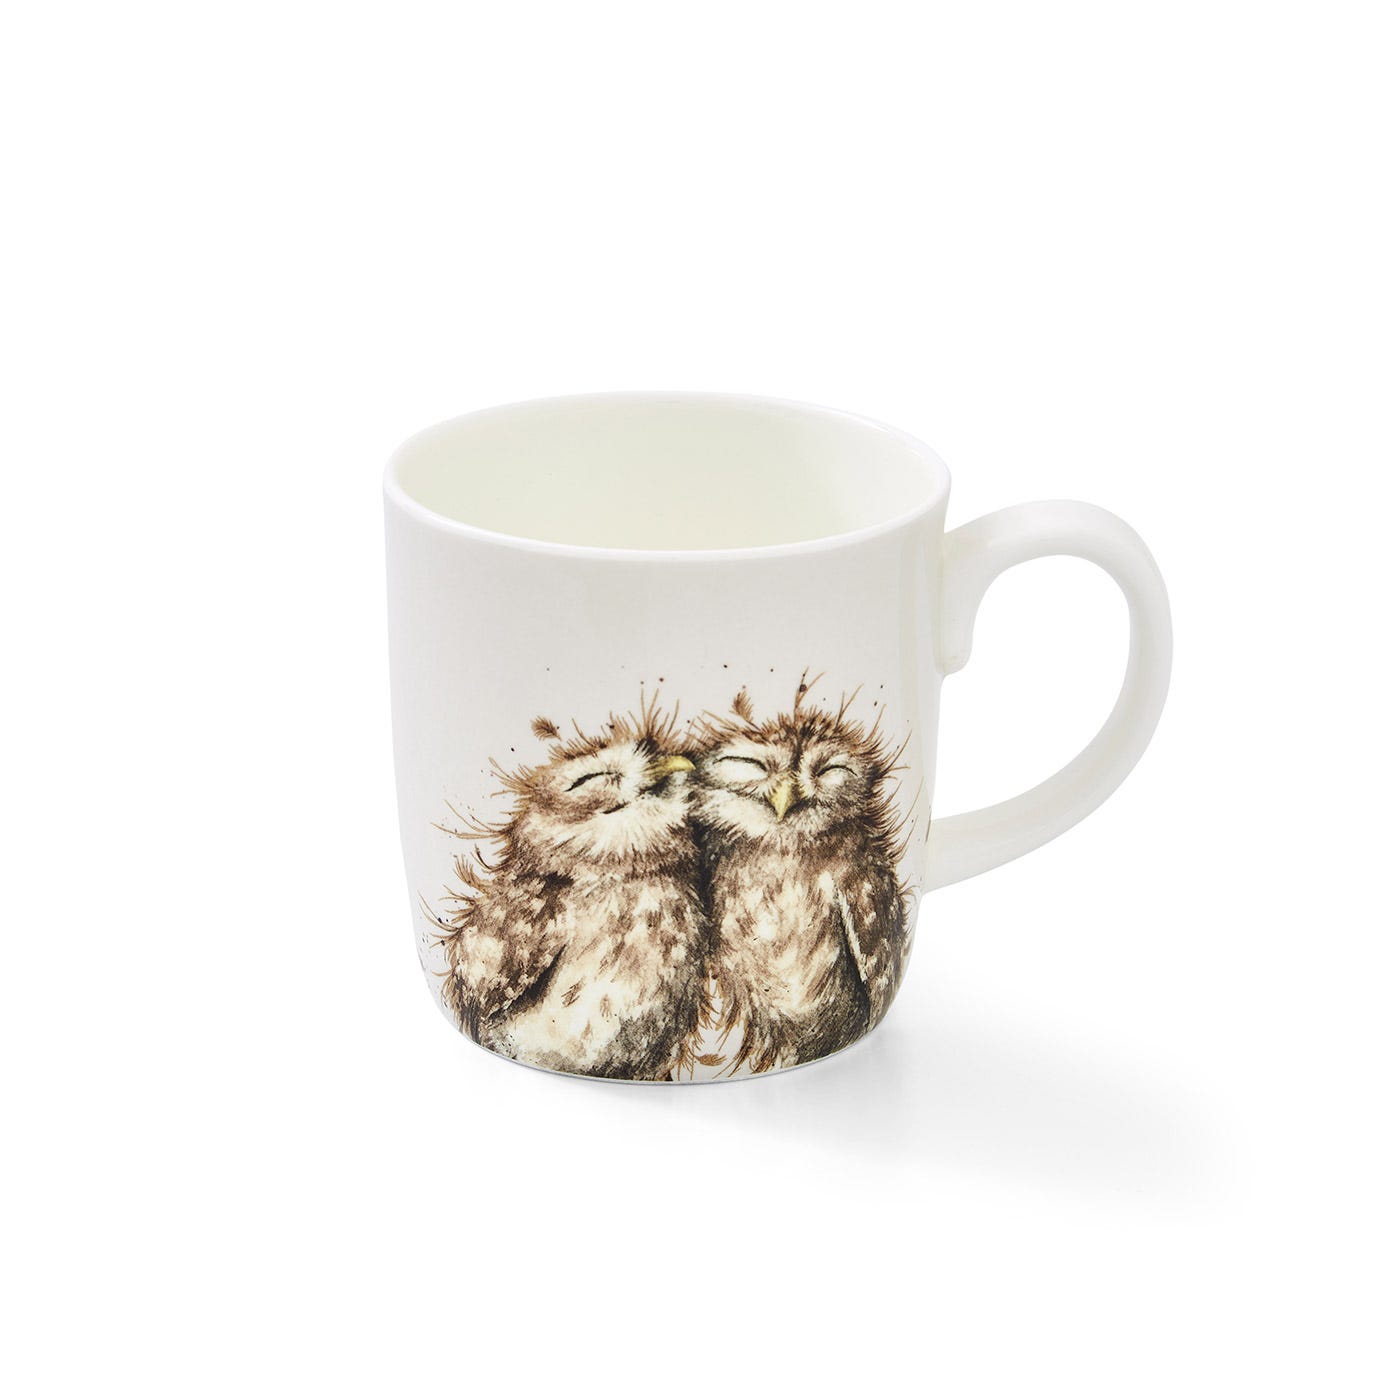 Wrendale Designs The Twits Owls Large Mug